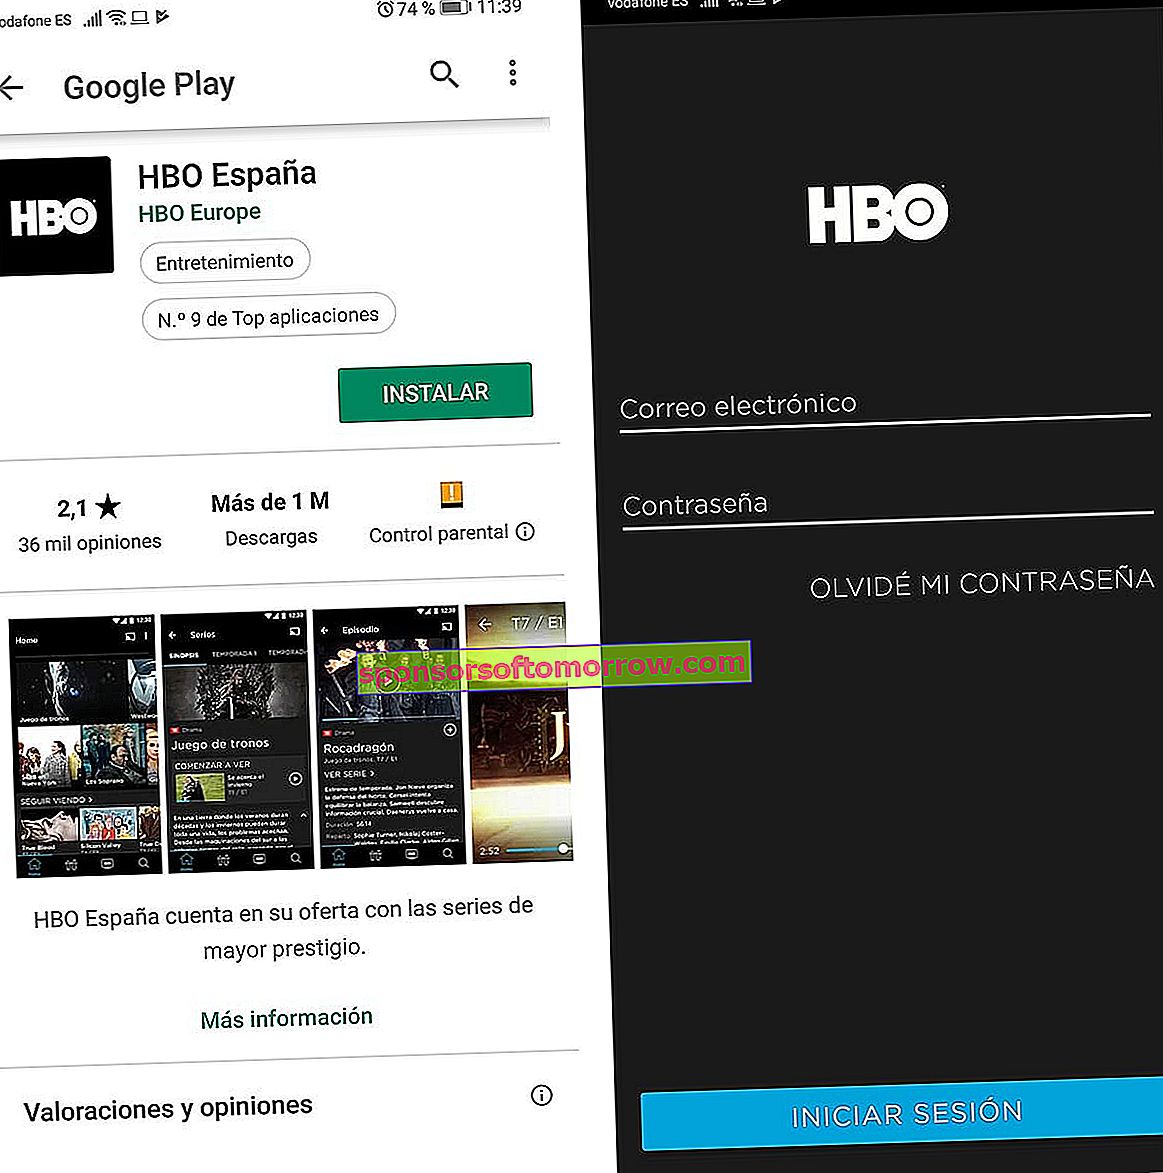 Kedai Google Play HBO